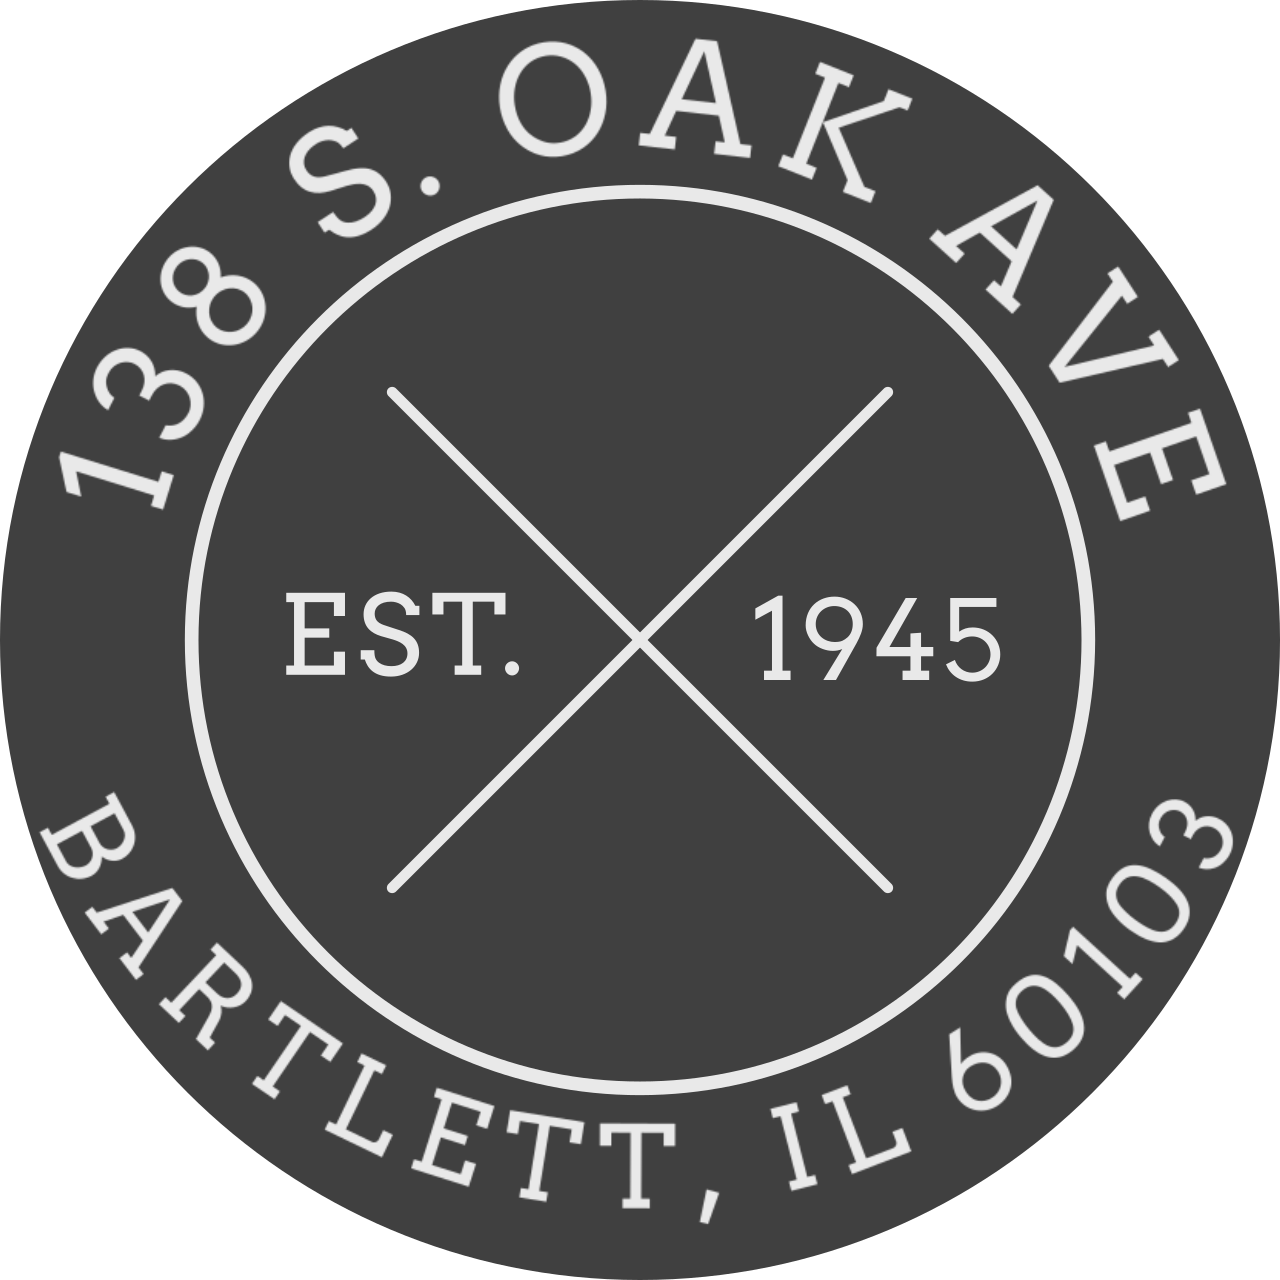 138 S. OAK AVE's web page